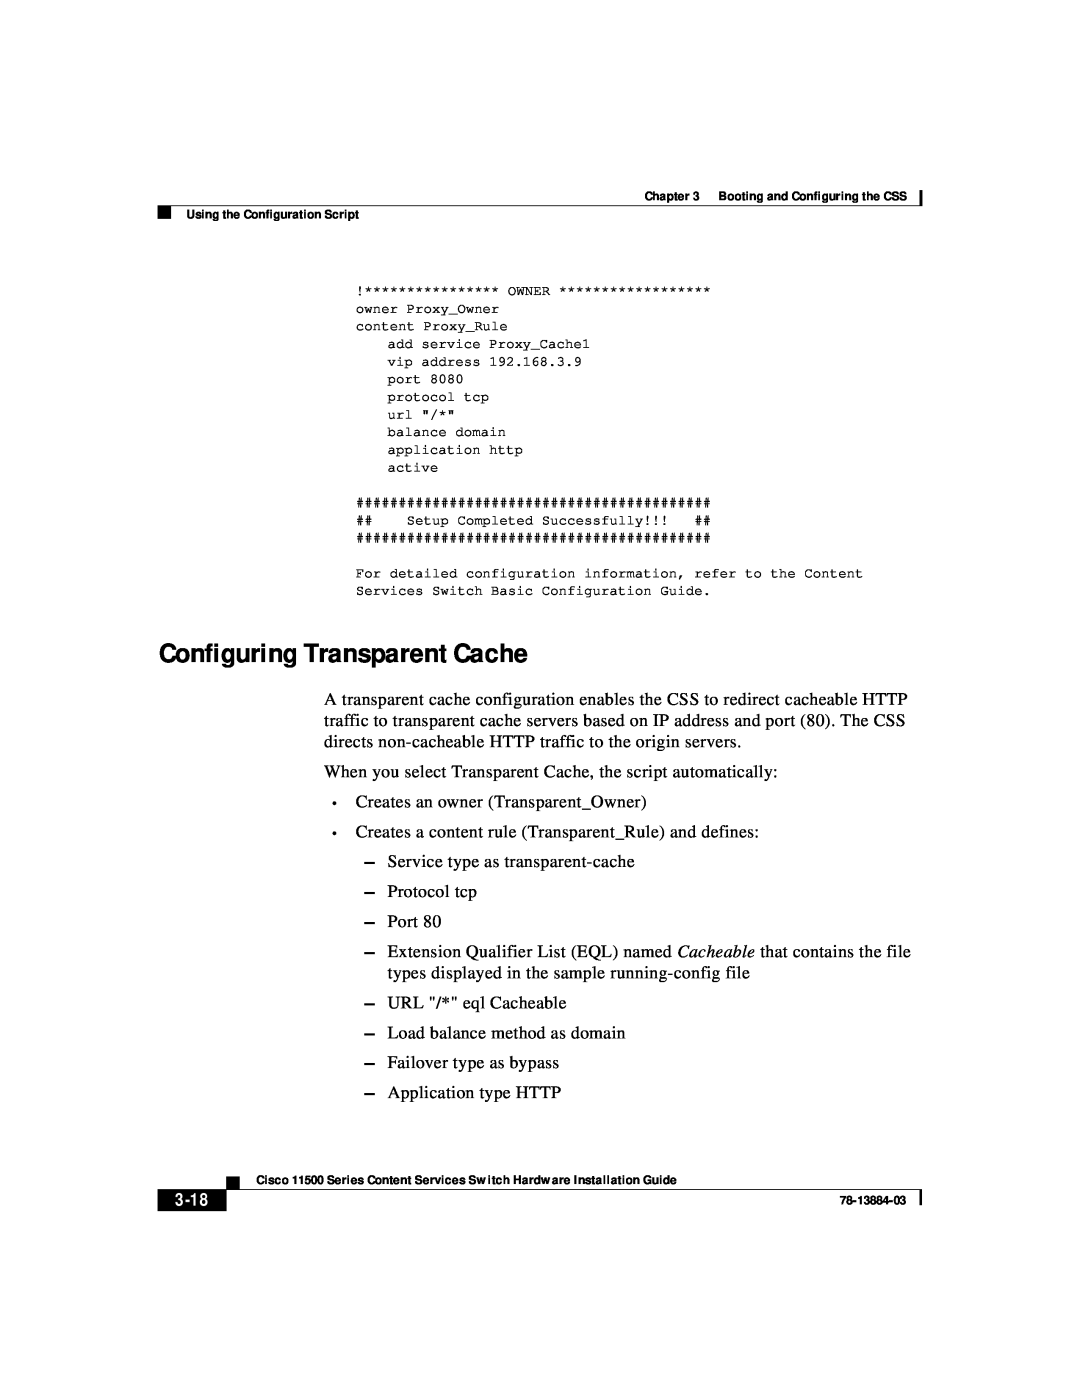 Cisco Systems 11500 Series manual Configuring Transparent Cache, 3-18 